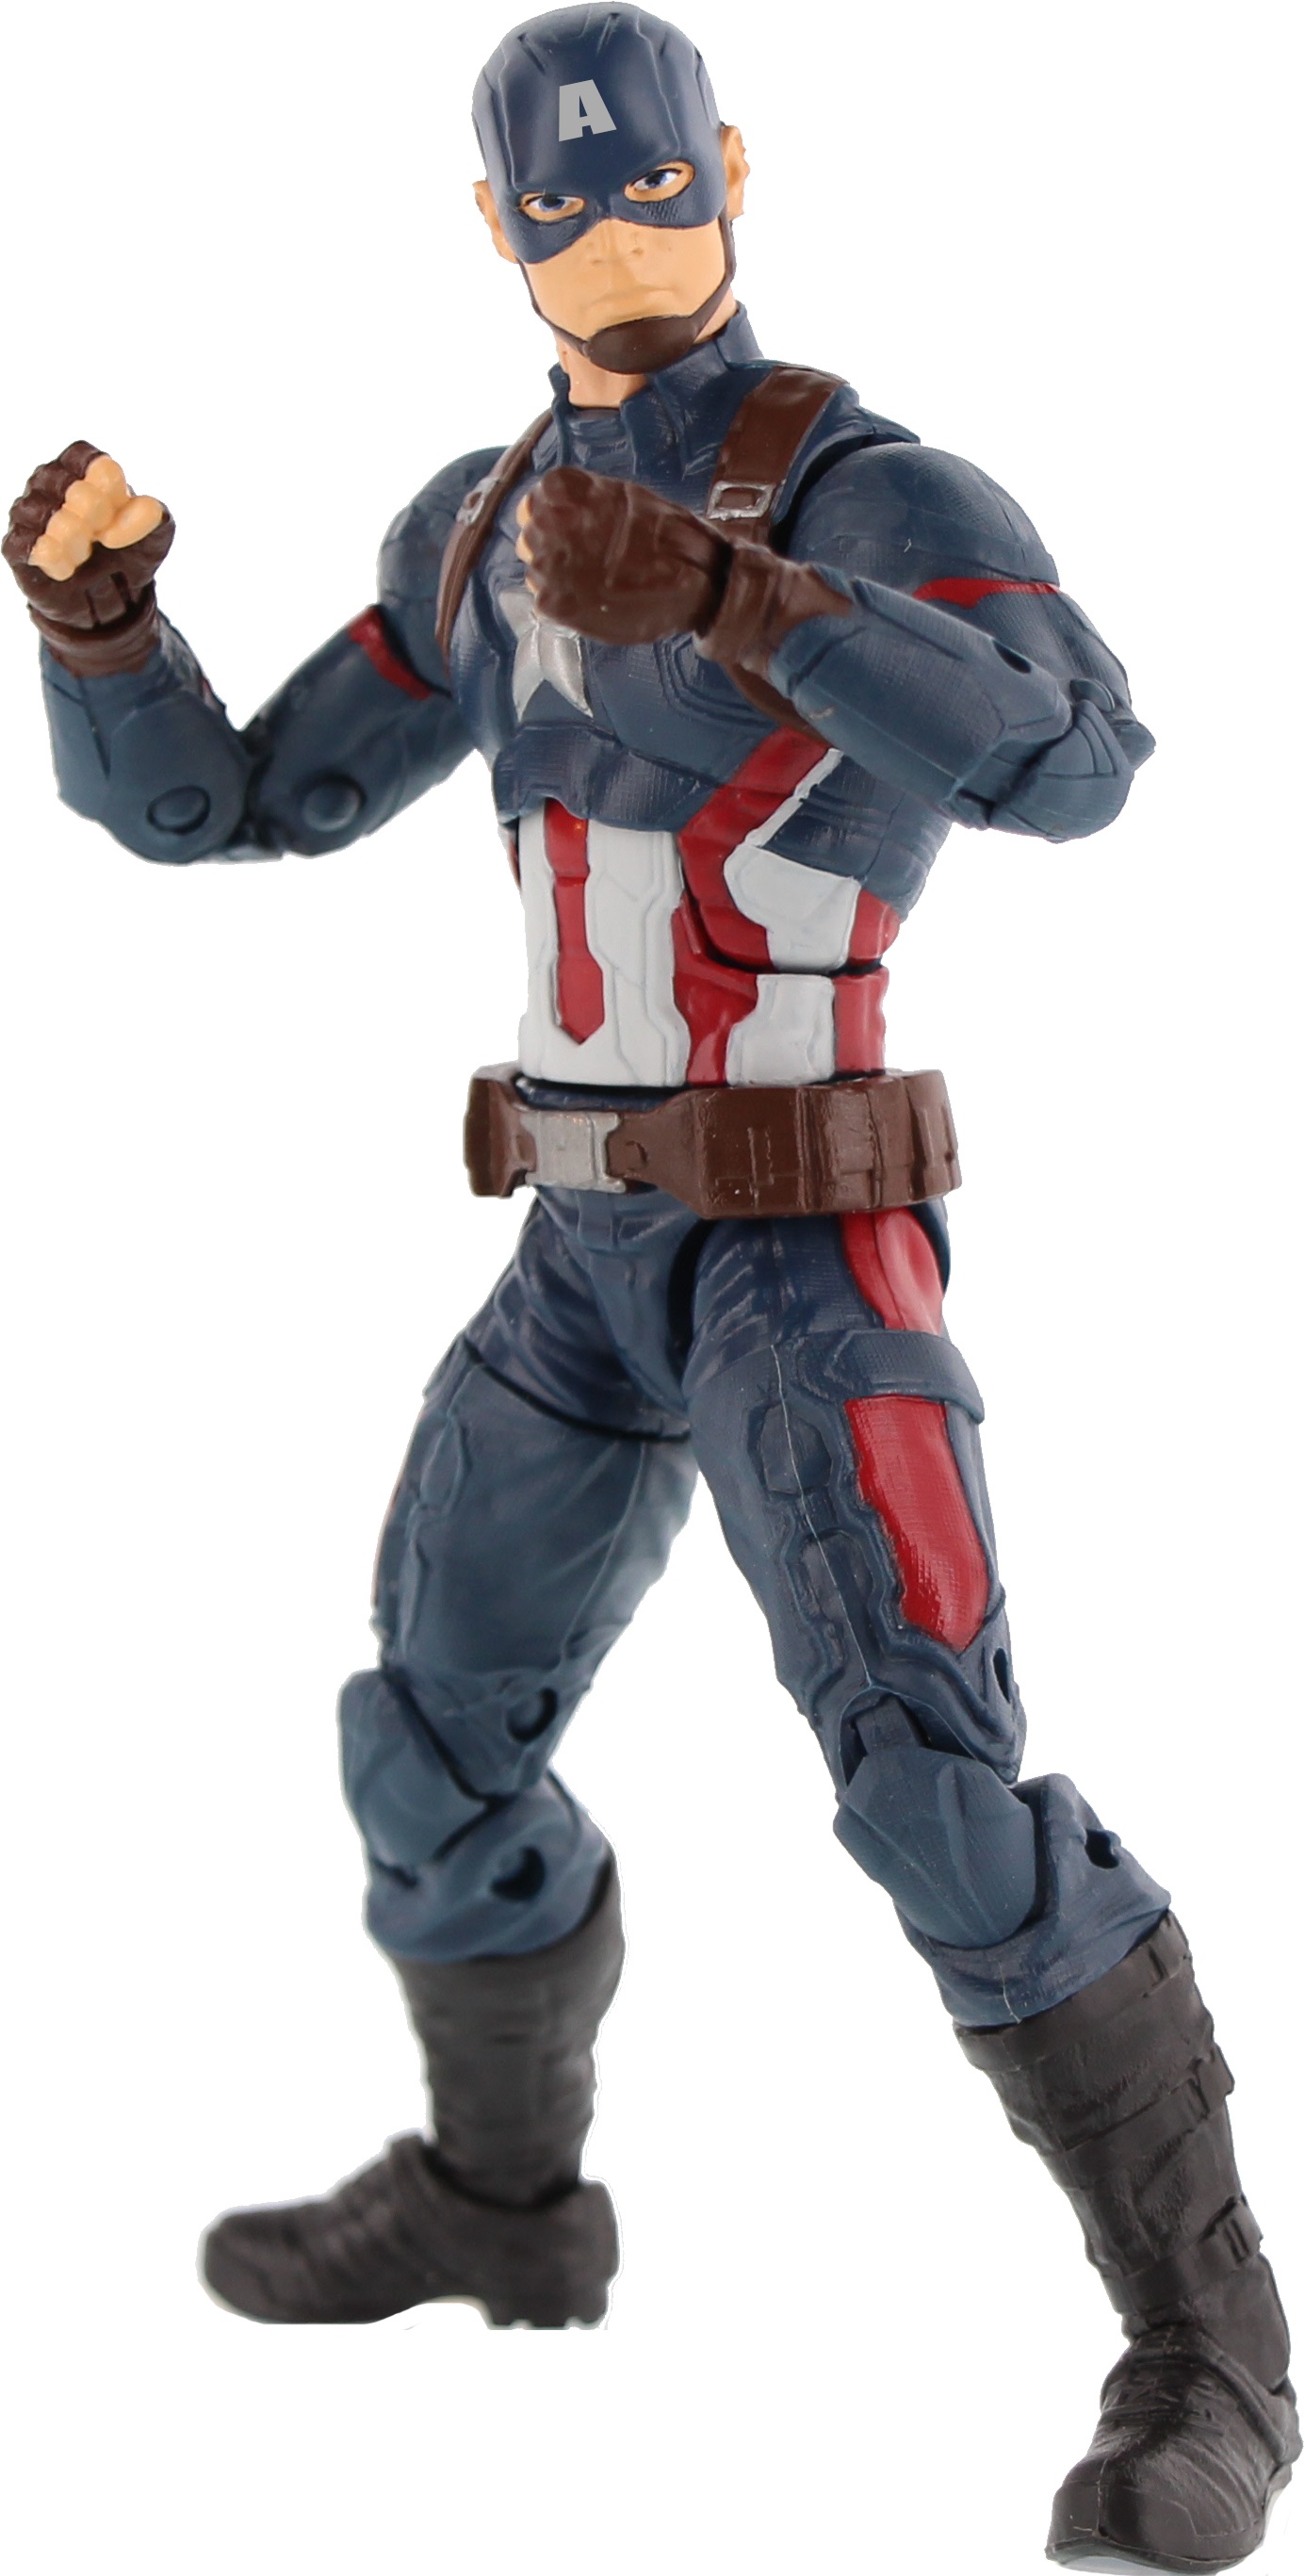 ckFiguresCaptainAmerica Captain America: Civil War Spider-Man Marvel Legends Figure Officially Revealed